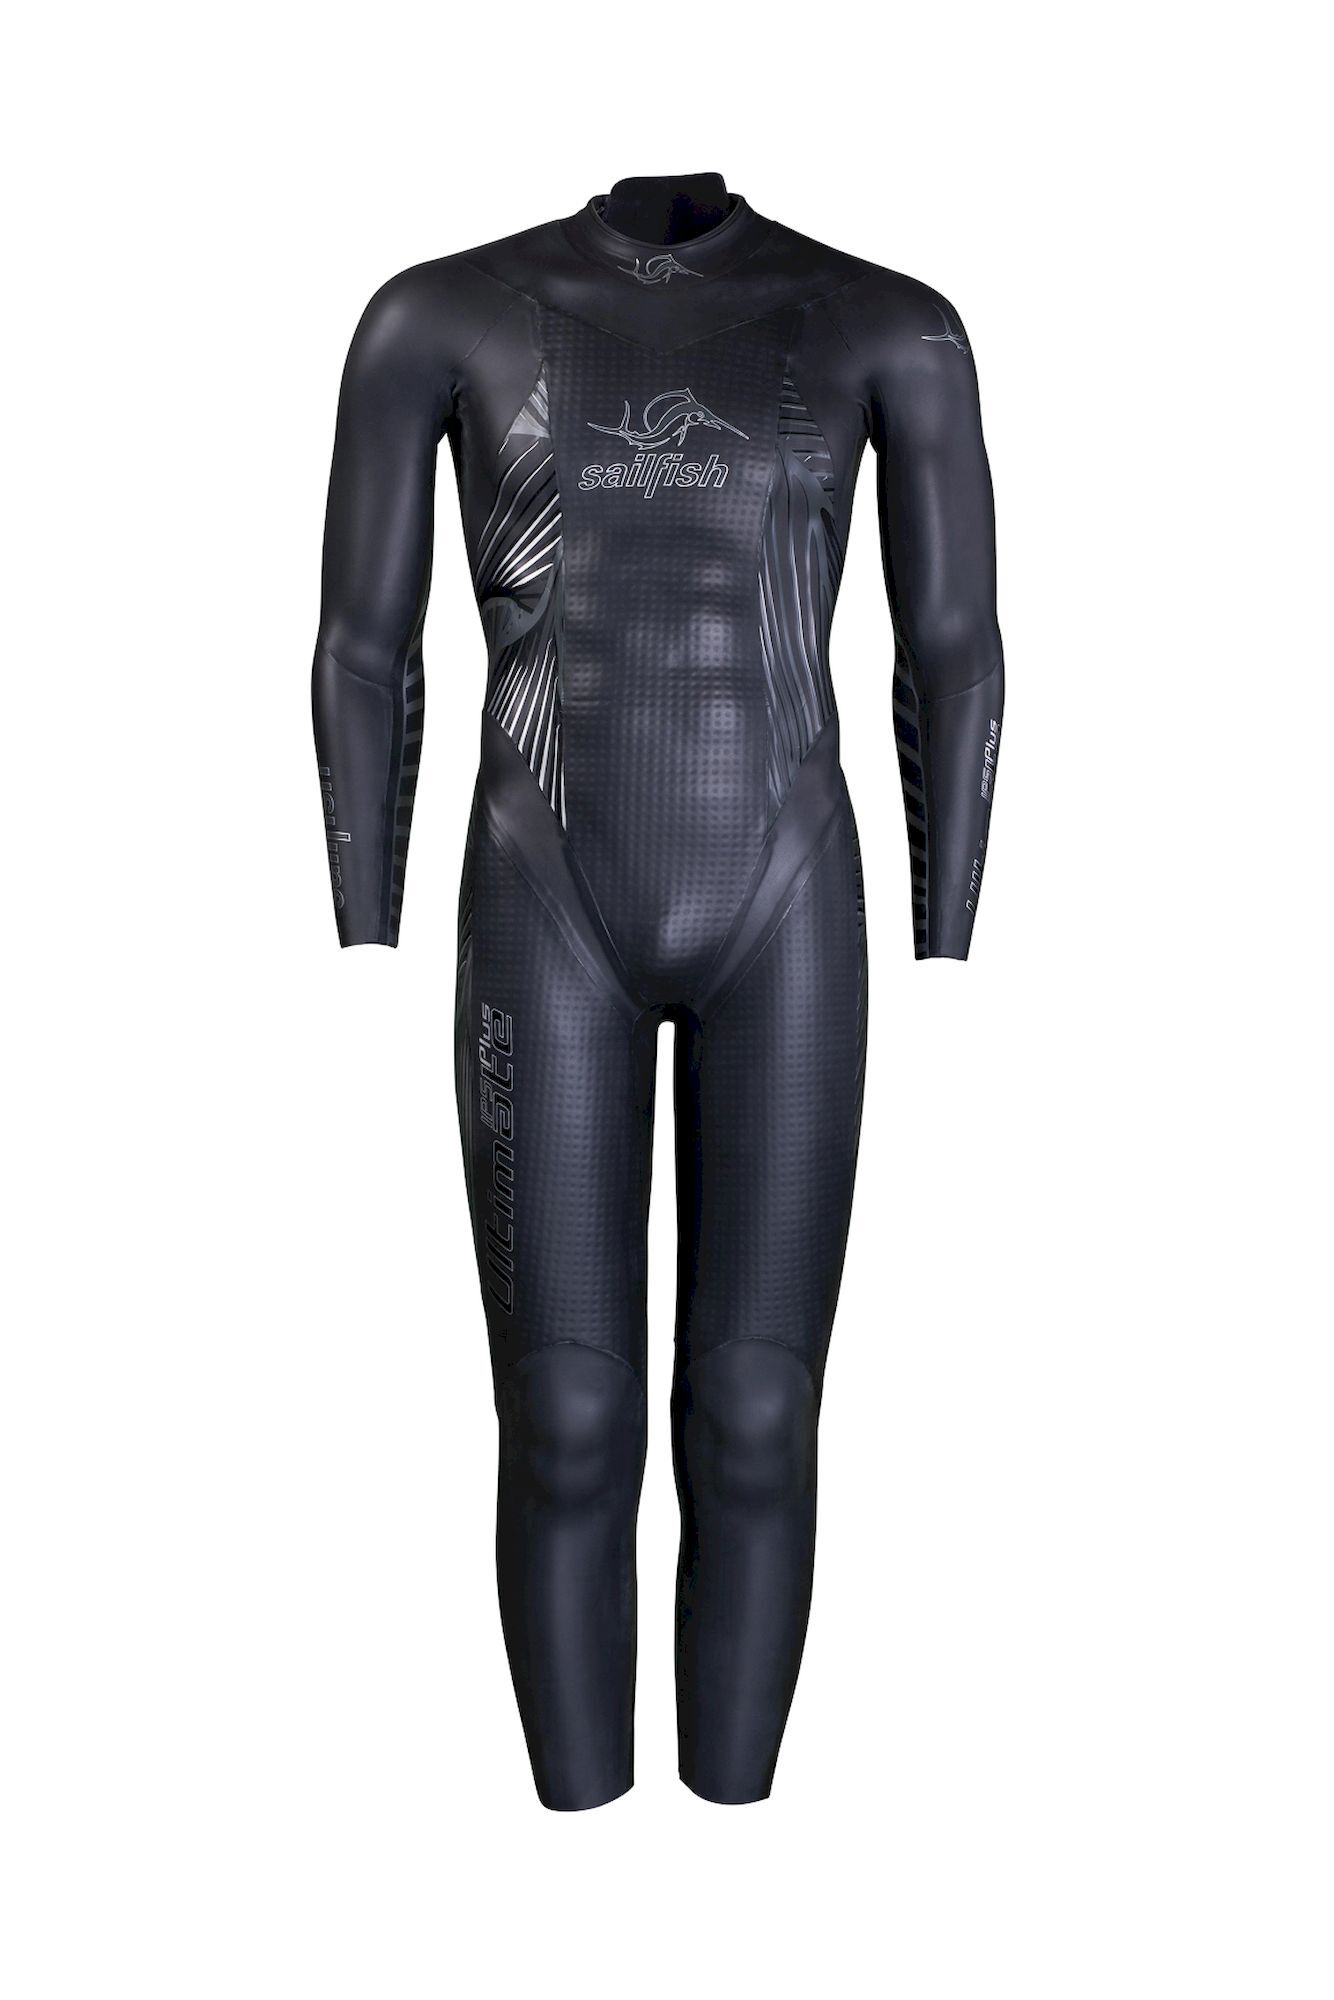 Sailfish Wetsuit Mens Ultimate IPS Plus 3 - Neoprene wetsuit - Men's